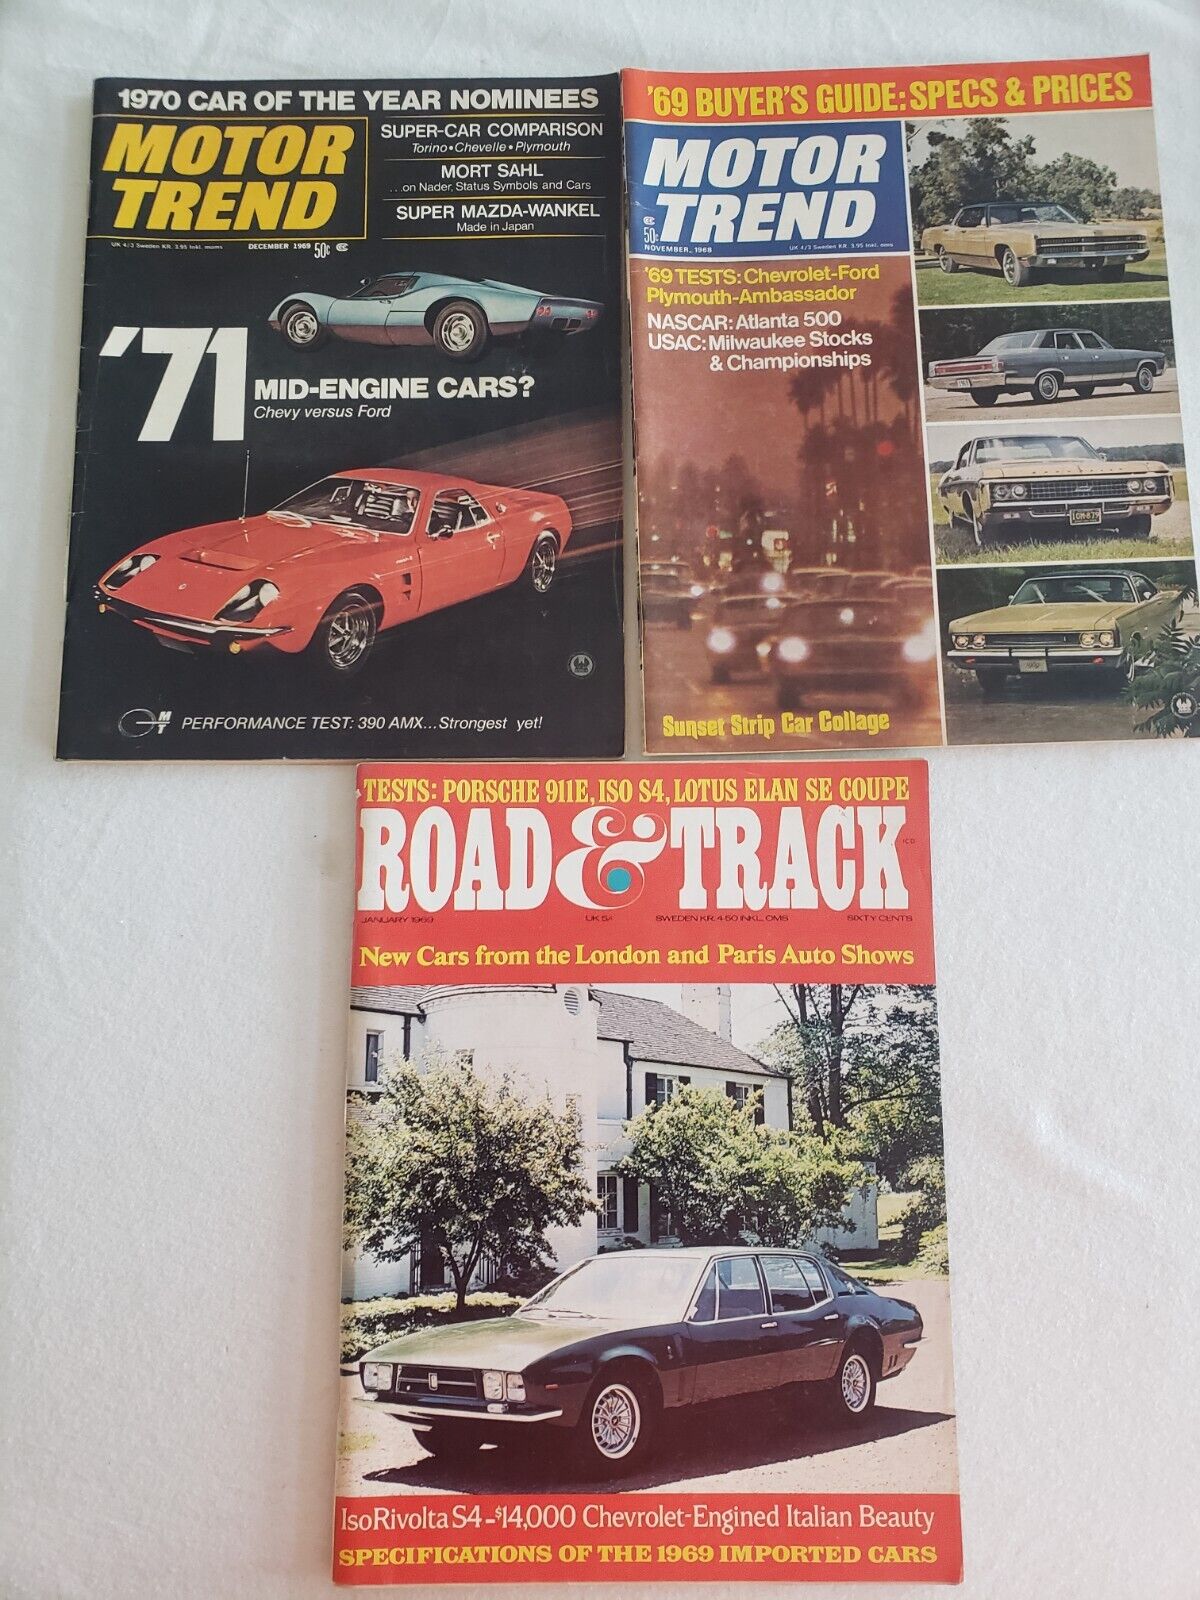 Motor trend December 1969 Motor trend November 1968 Road and track January 1969